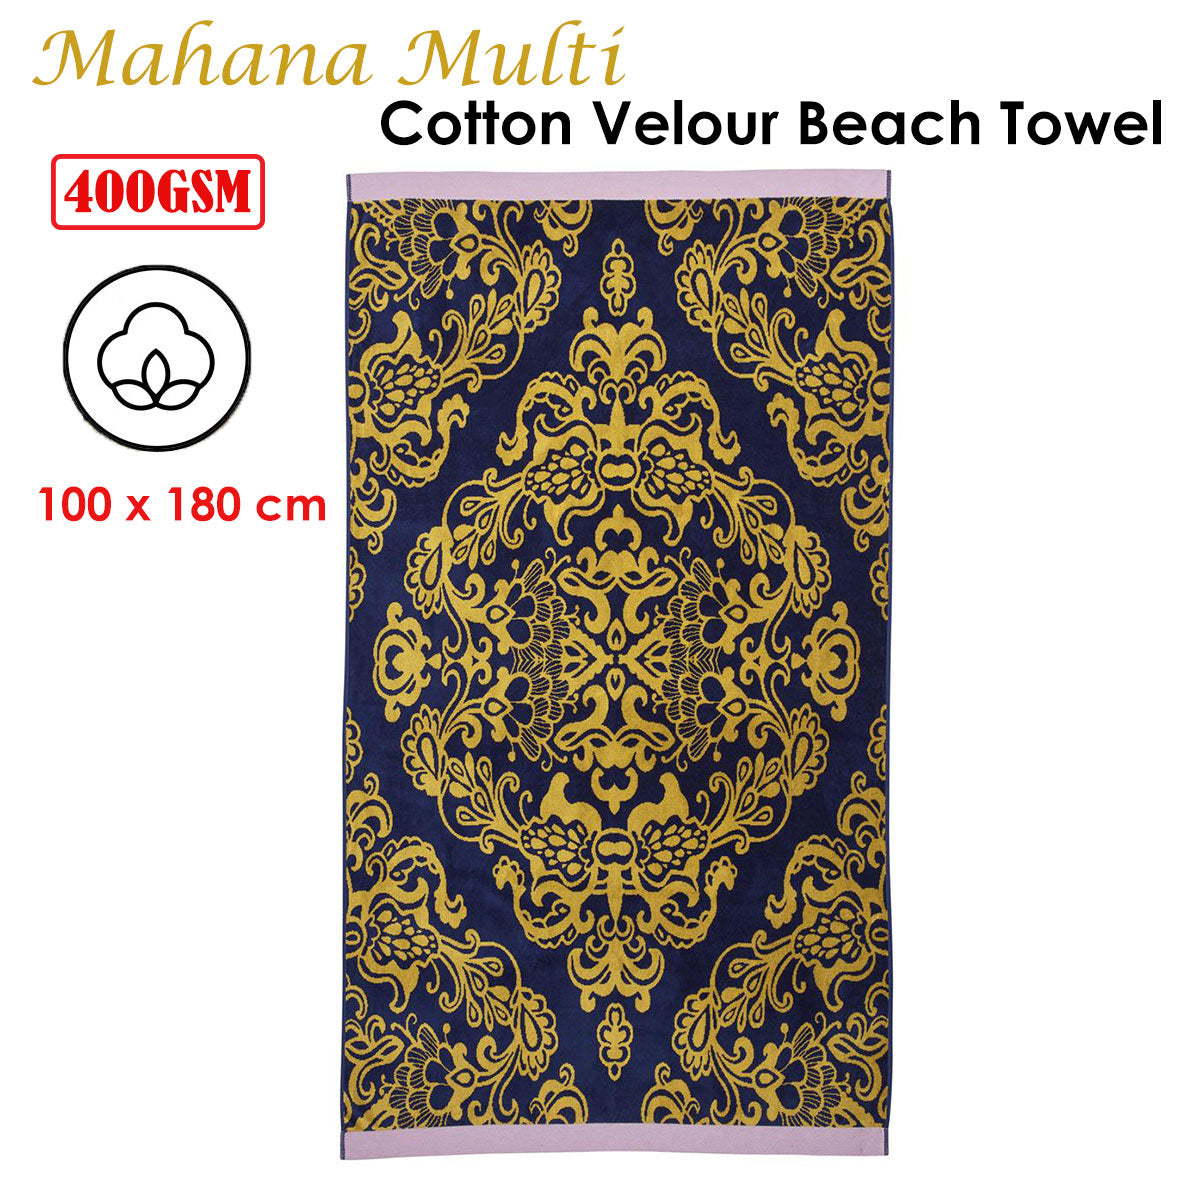 Bedding House Mahana Multi Cotton Velour Beach Towel - Beach Towels - Zanlana Design and Home Decor